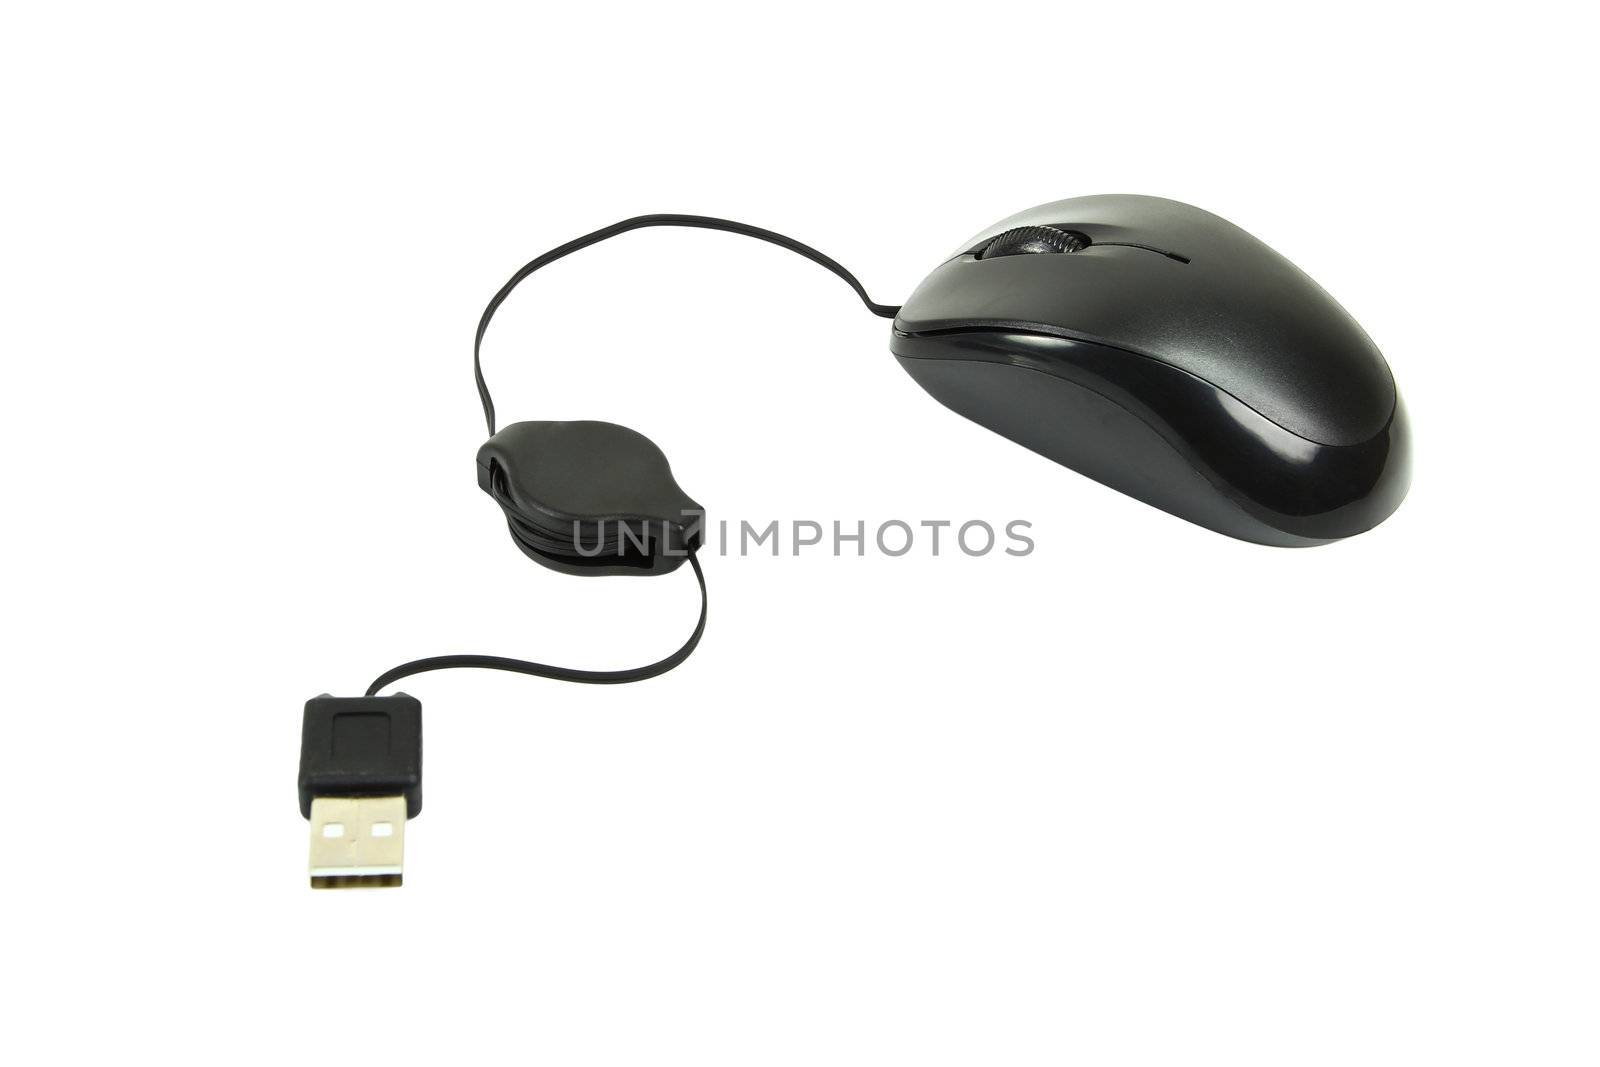 Computer mouse by bajita111122